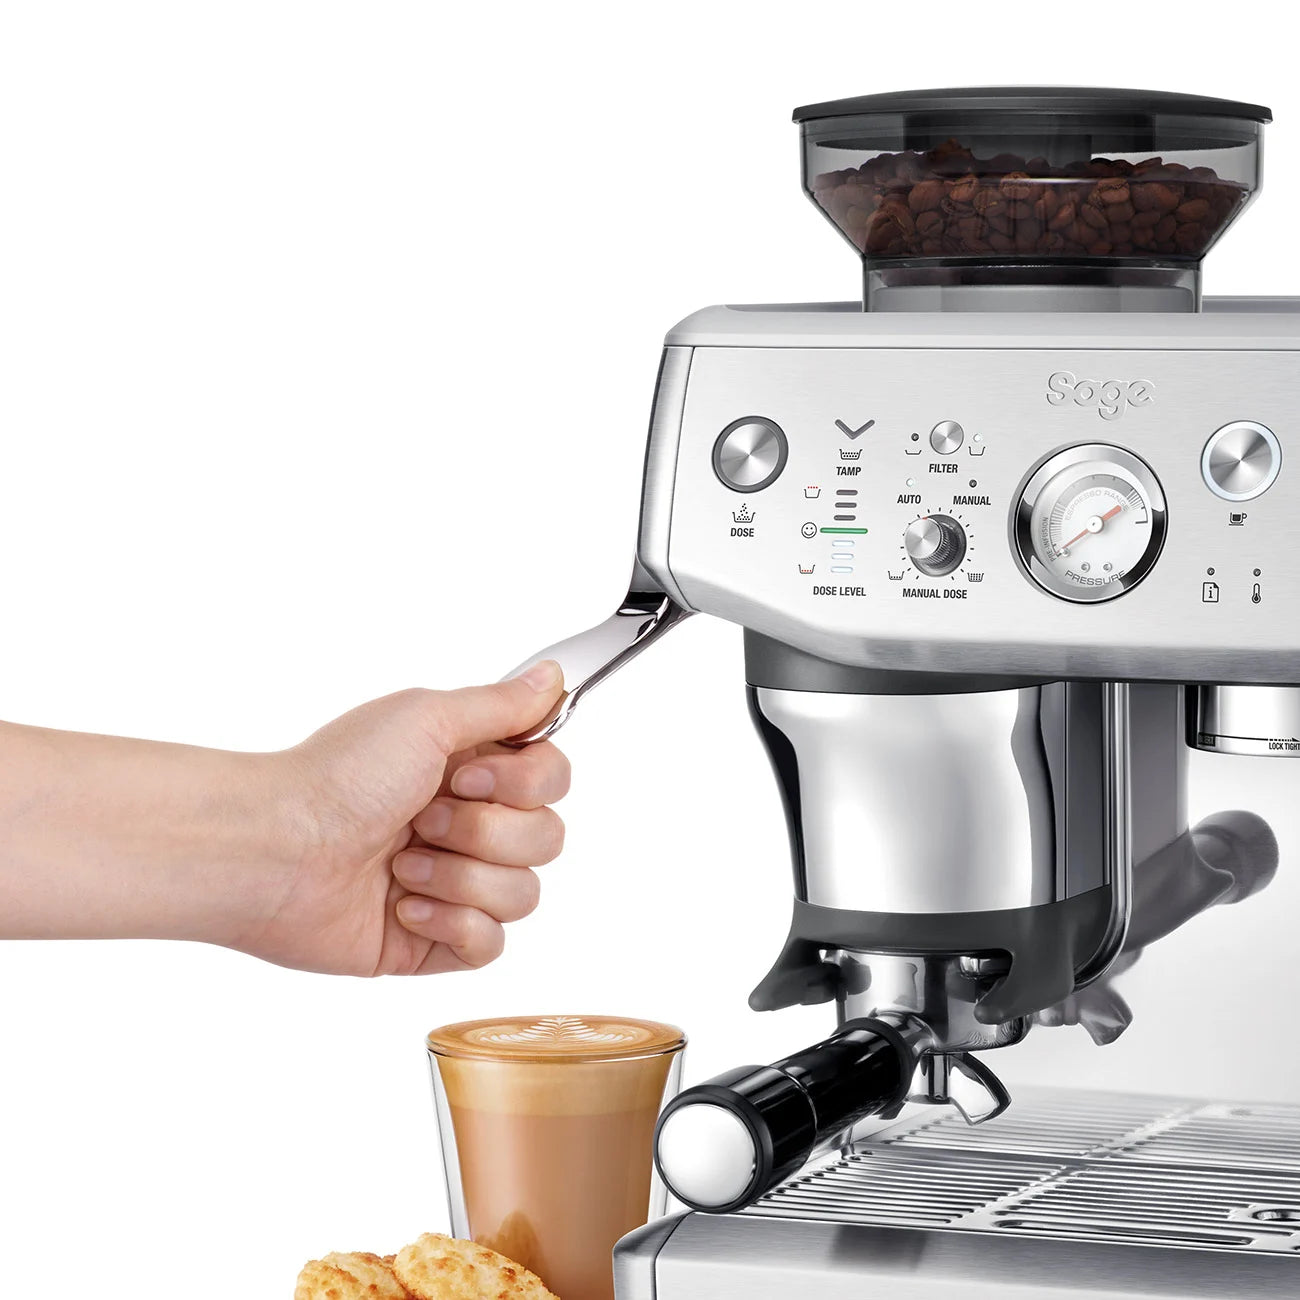 Sage macchina da caffè espresso The Barista Express Impress colore nero Trufle SES876BTR4EEU1